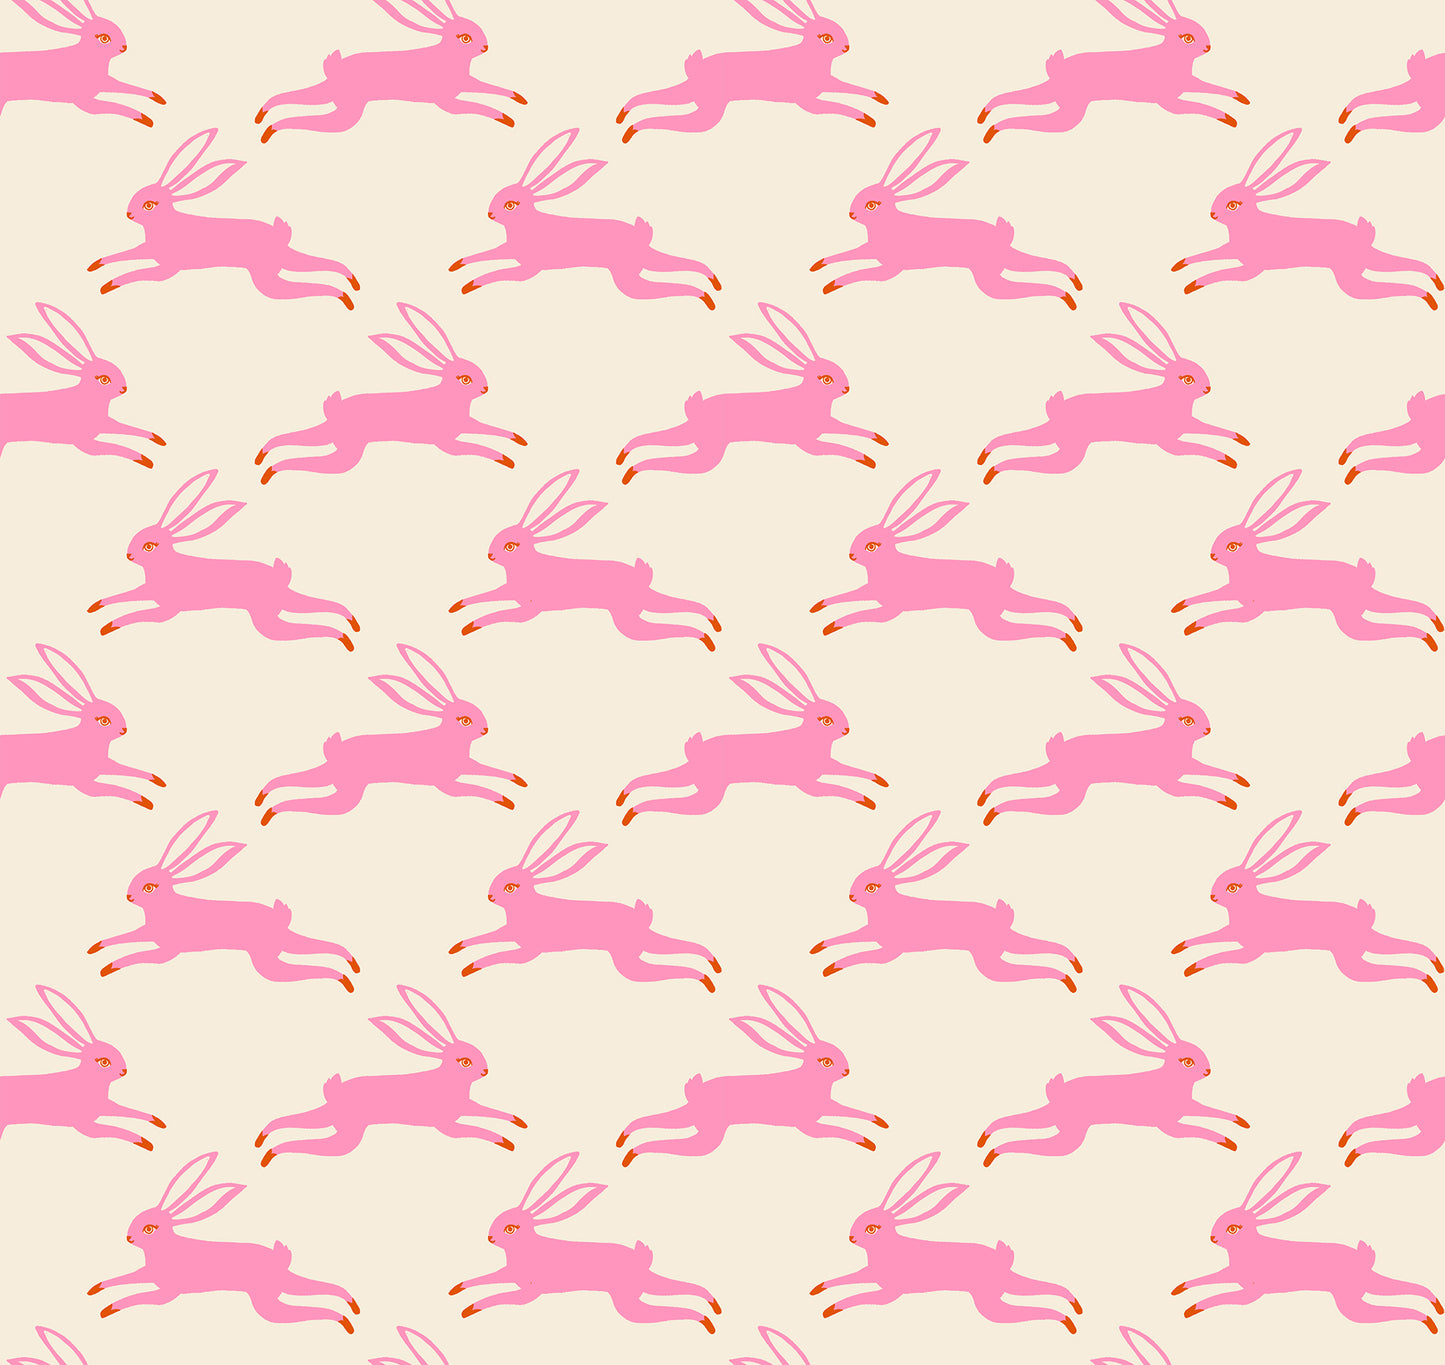 Ruby Star Society Backyard Bunny Run in Flamingo. Pink bunnies jumping on cream background. 